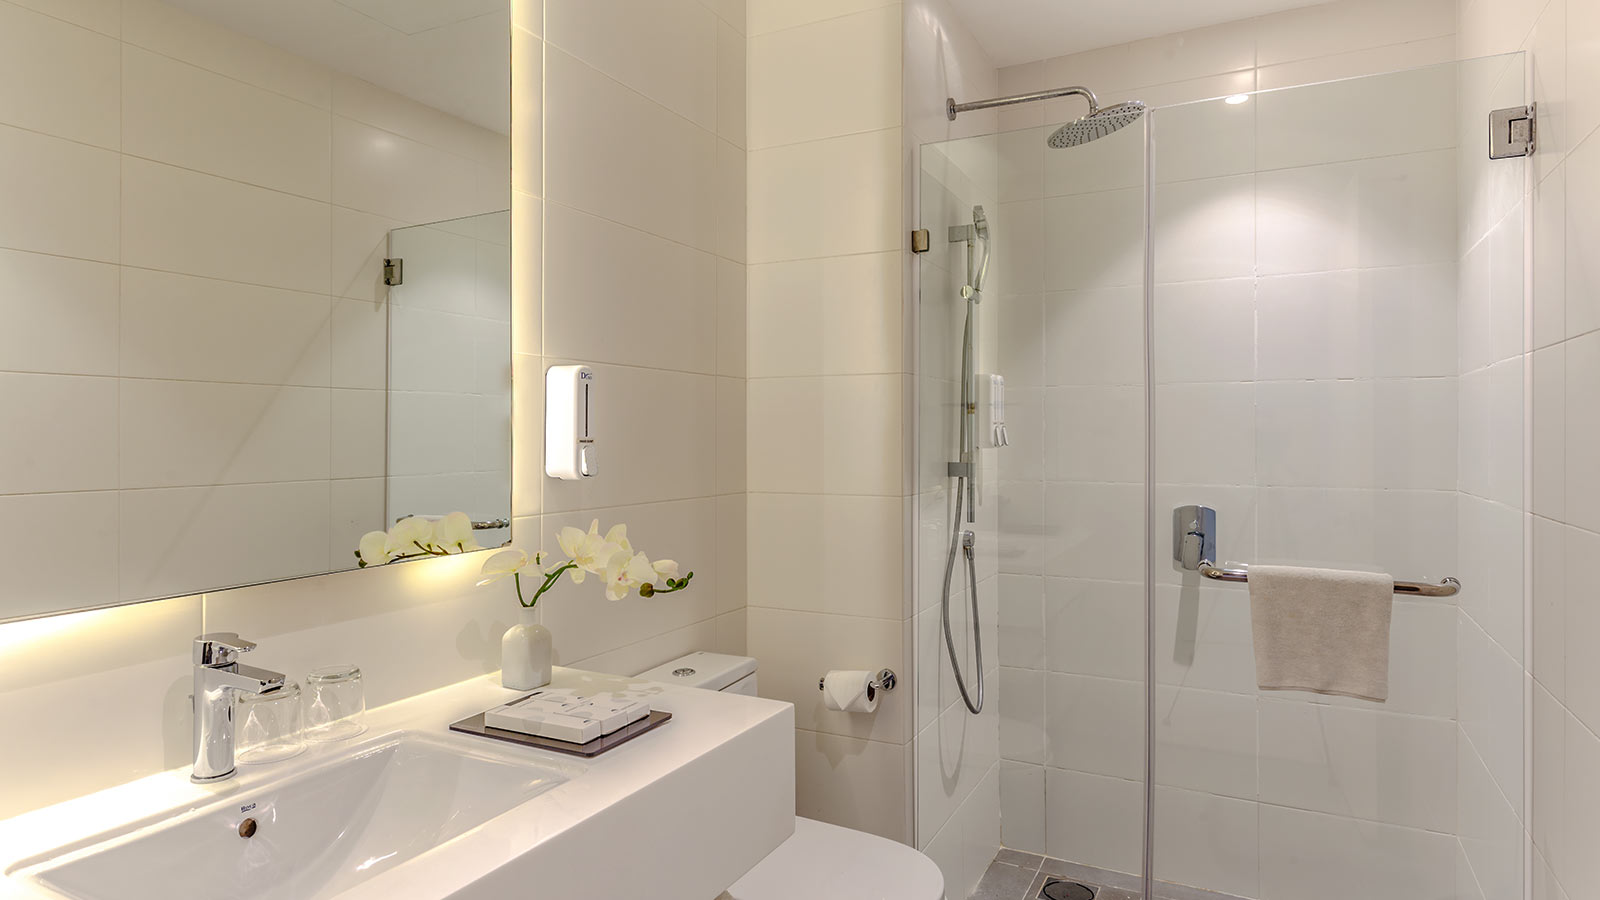 Shama Suasana Johor Bahru - Executive Three Bedroom Suite Bathroom - Shama Suasana Johor Bahru